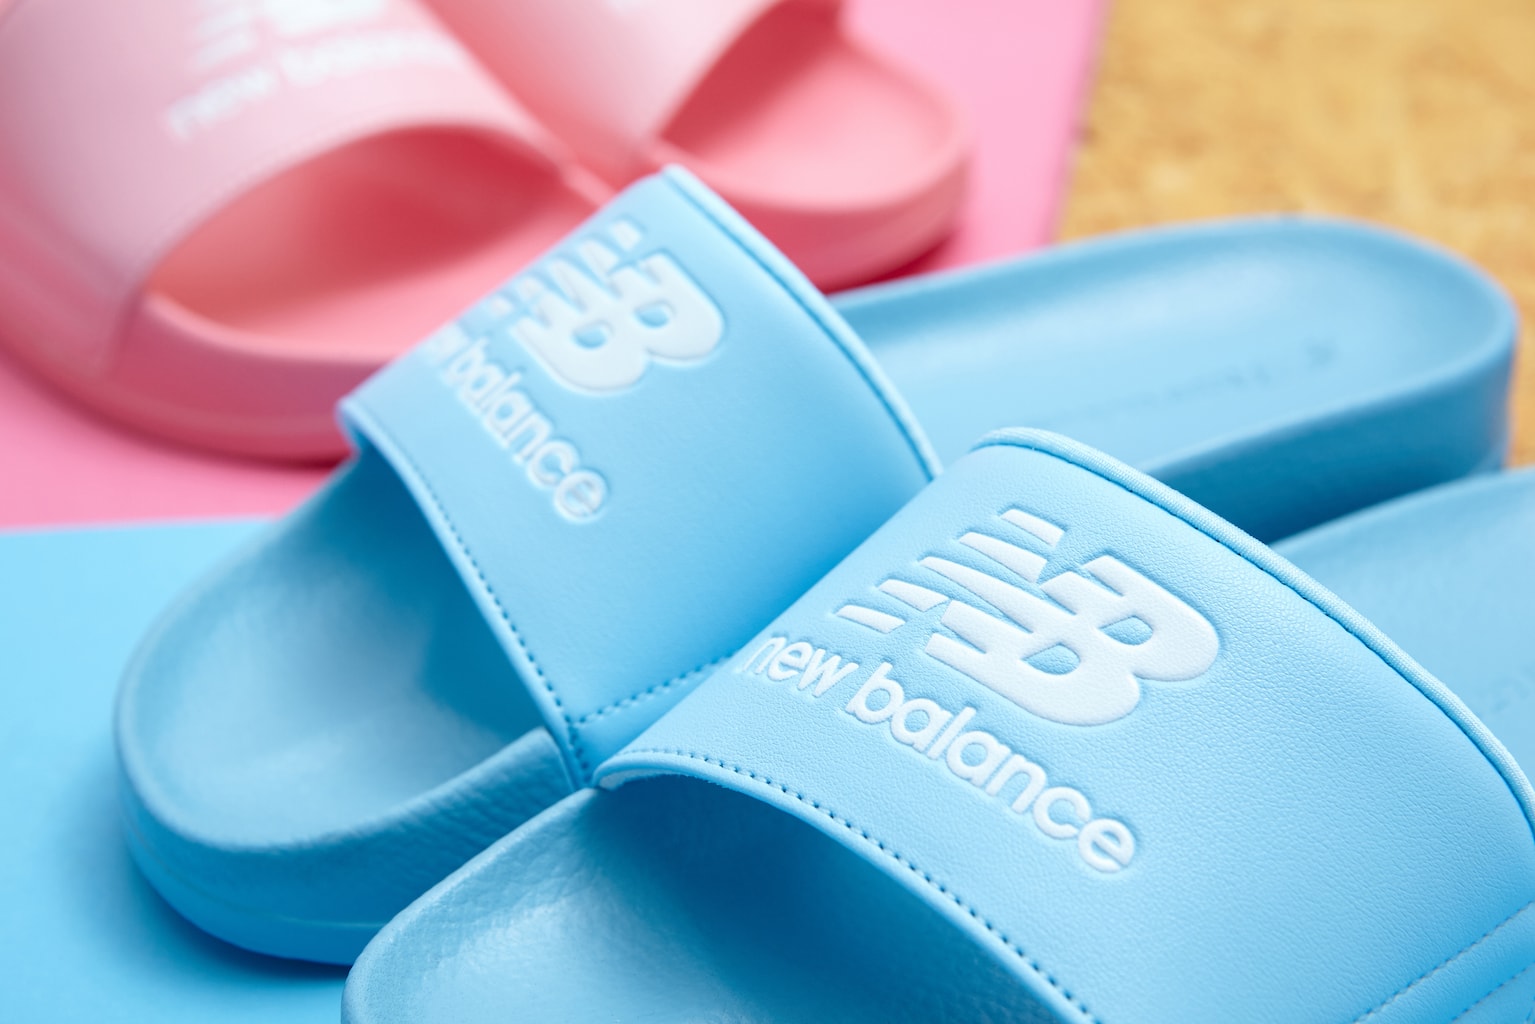 New Balance 推出全新 Summer Sandals Pack 涼拖鞋系列